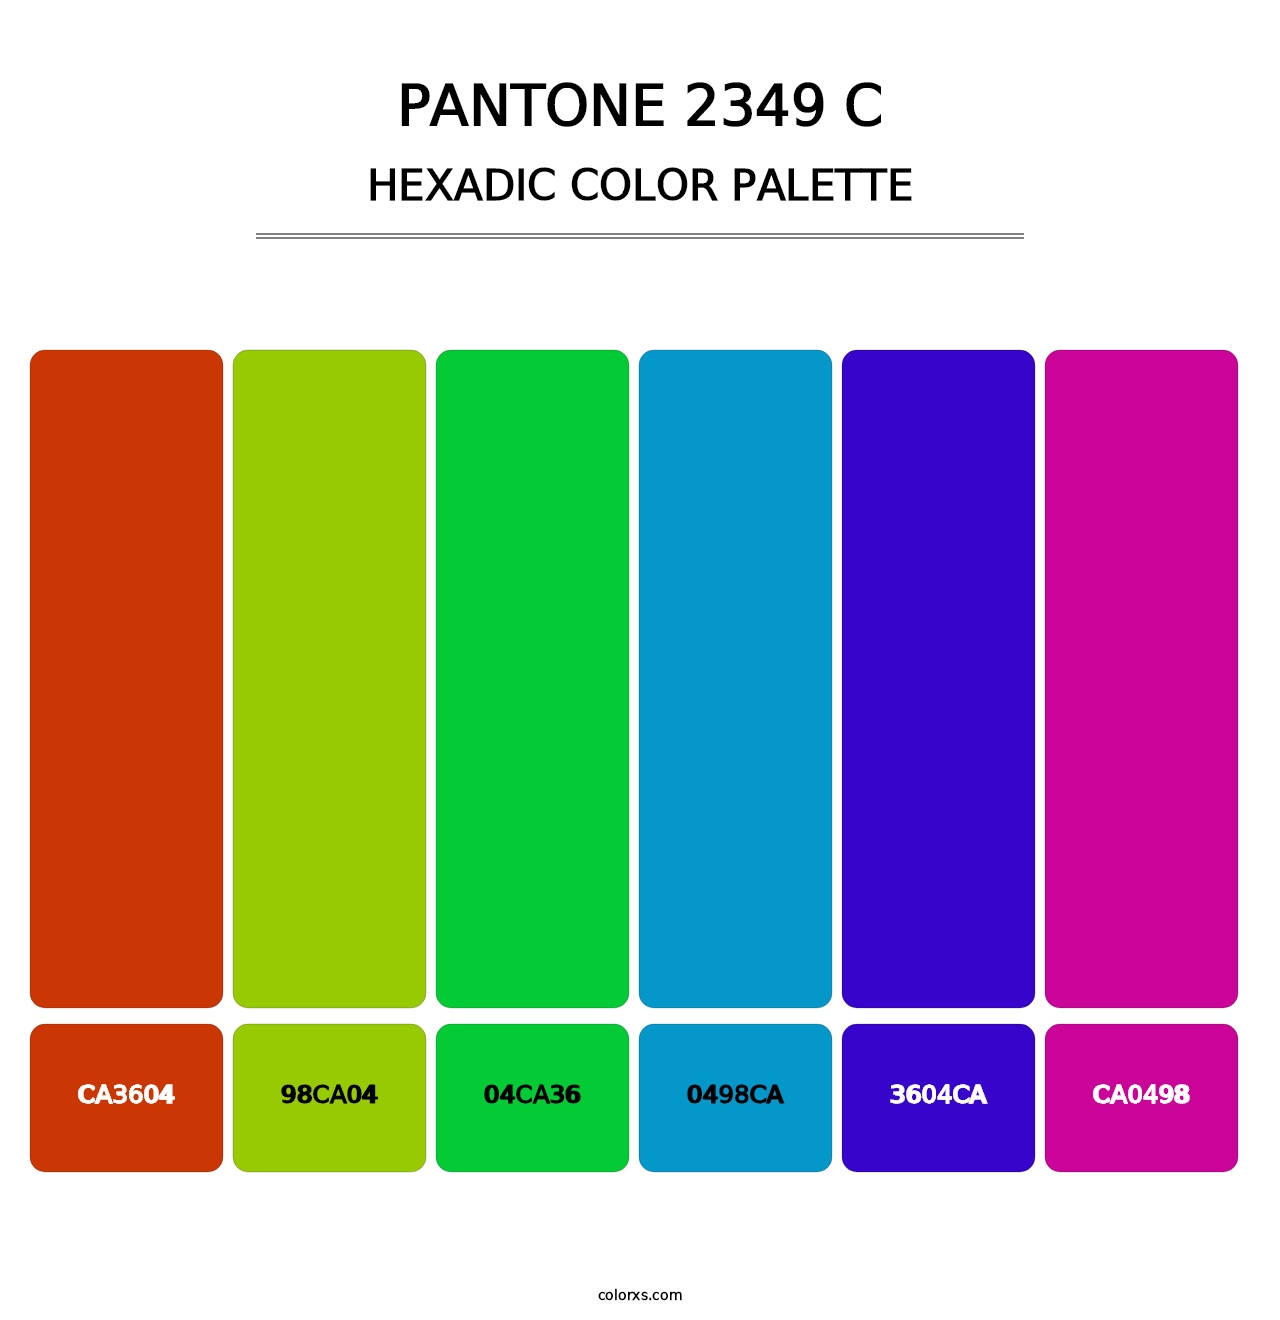 PANTONE 2349 C - Hexadic Color Palette